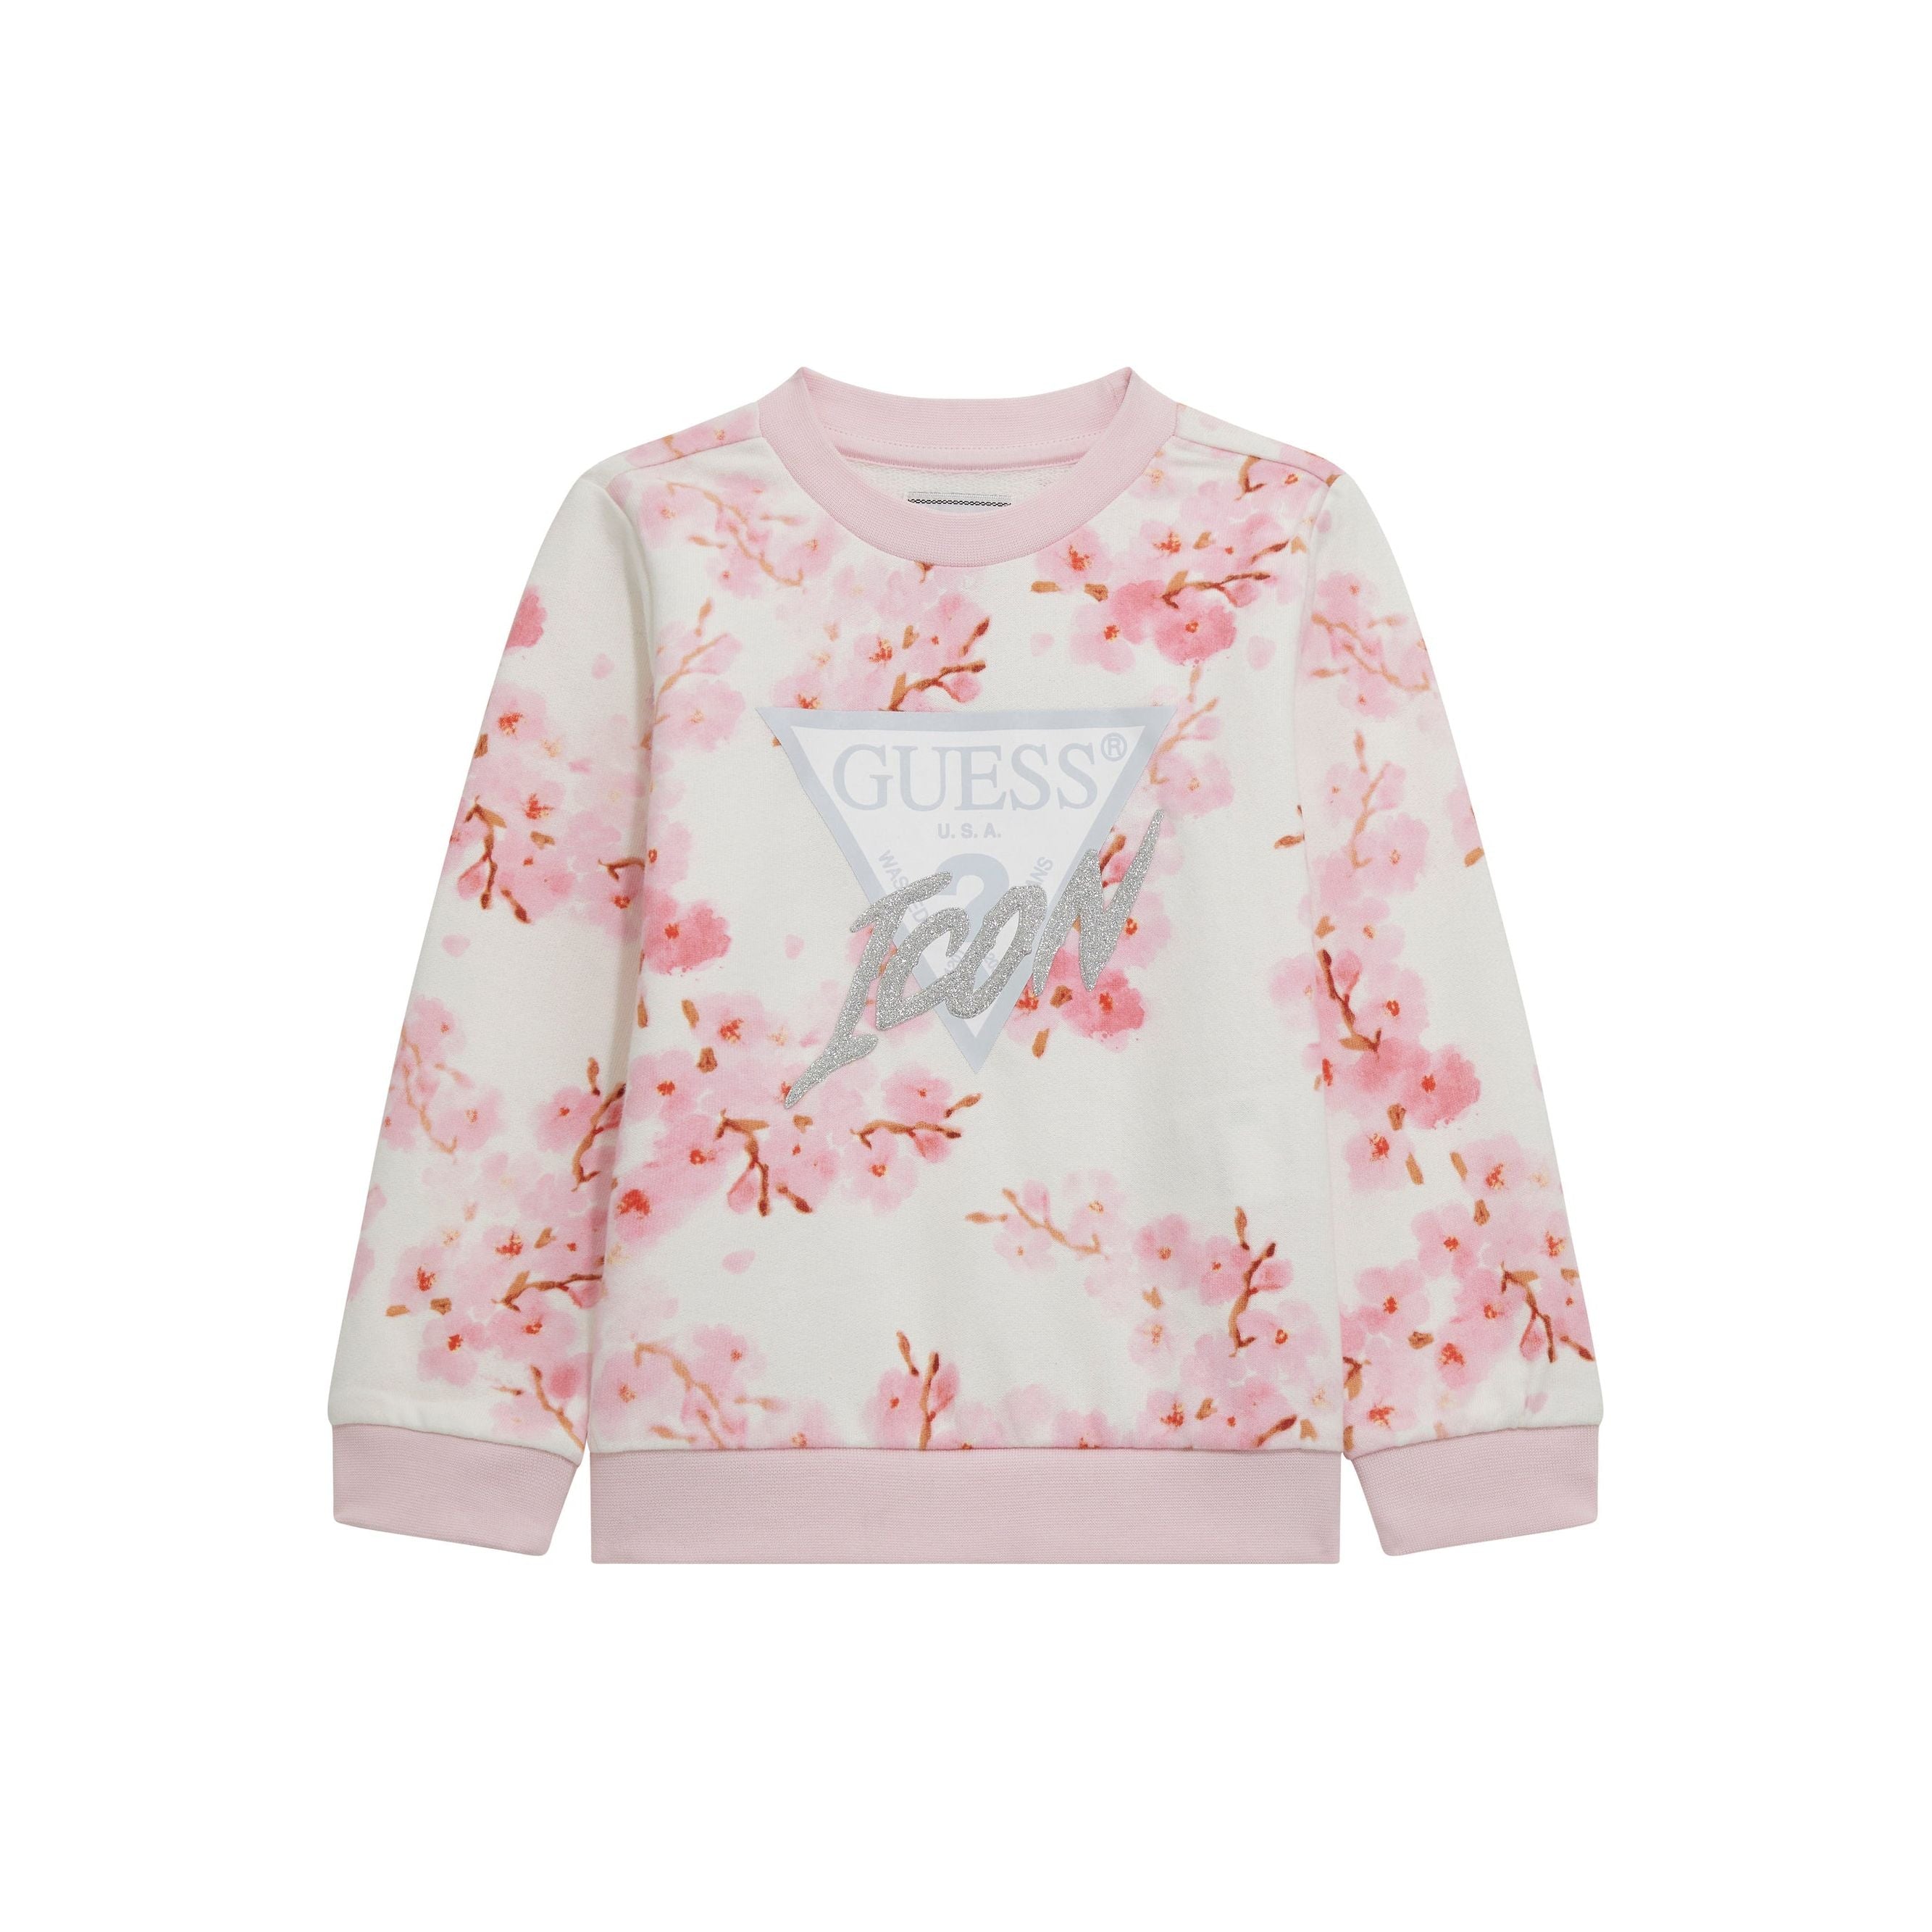 Guess - Toddler Girls Sweatshirt in Cherry Blossom